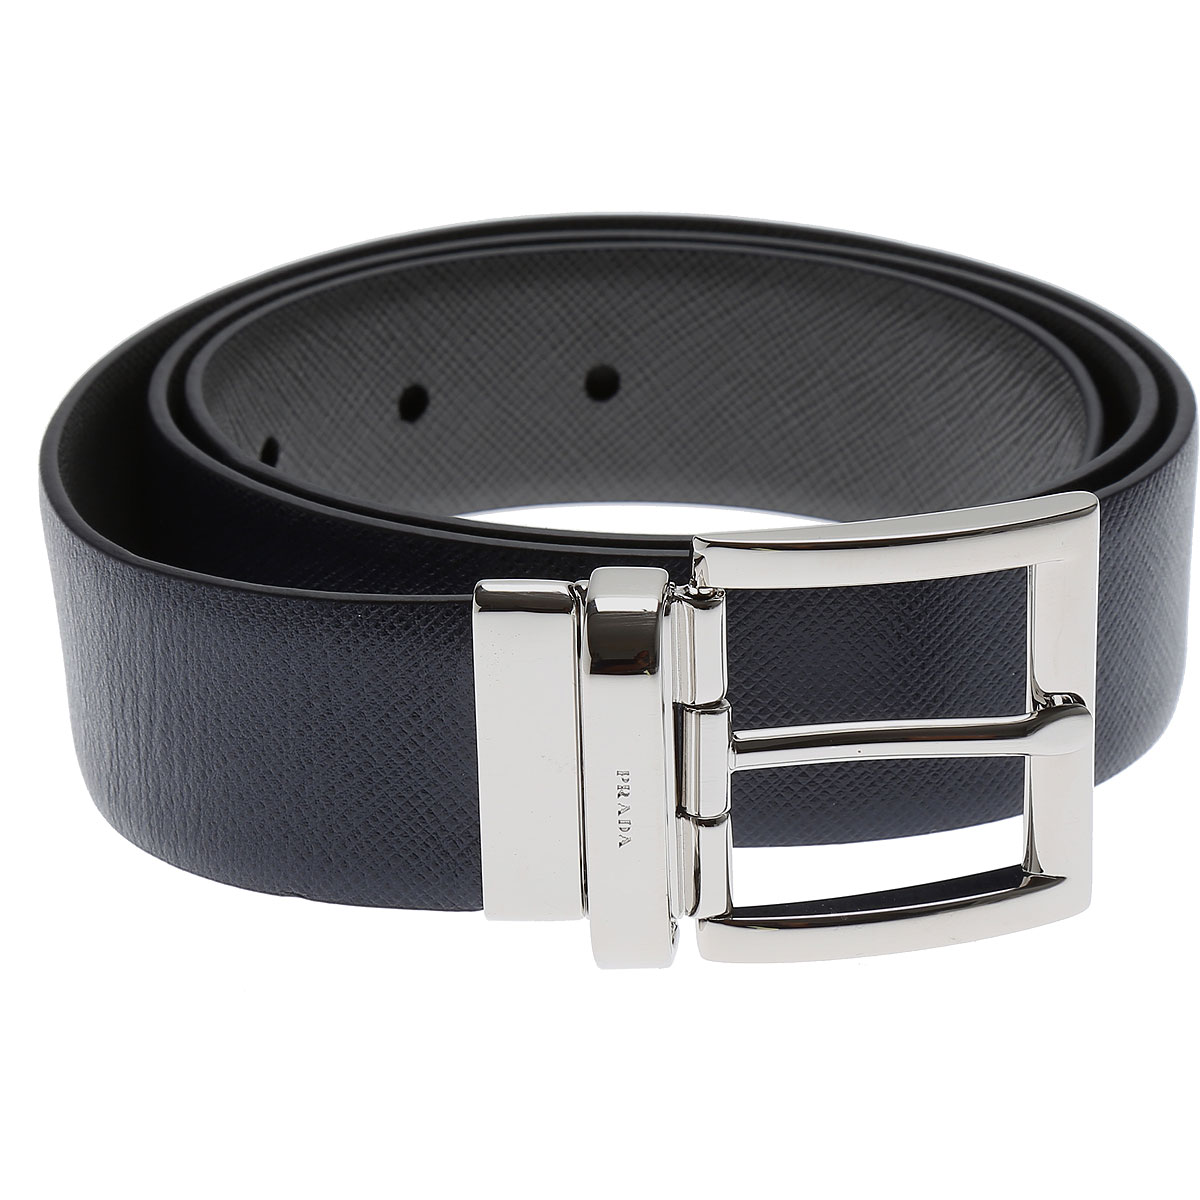 Mens Belts Prada, Style code: 2cc004-053-dvi